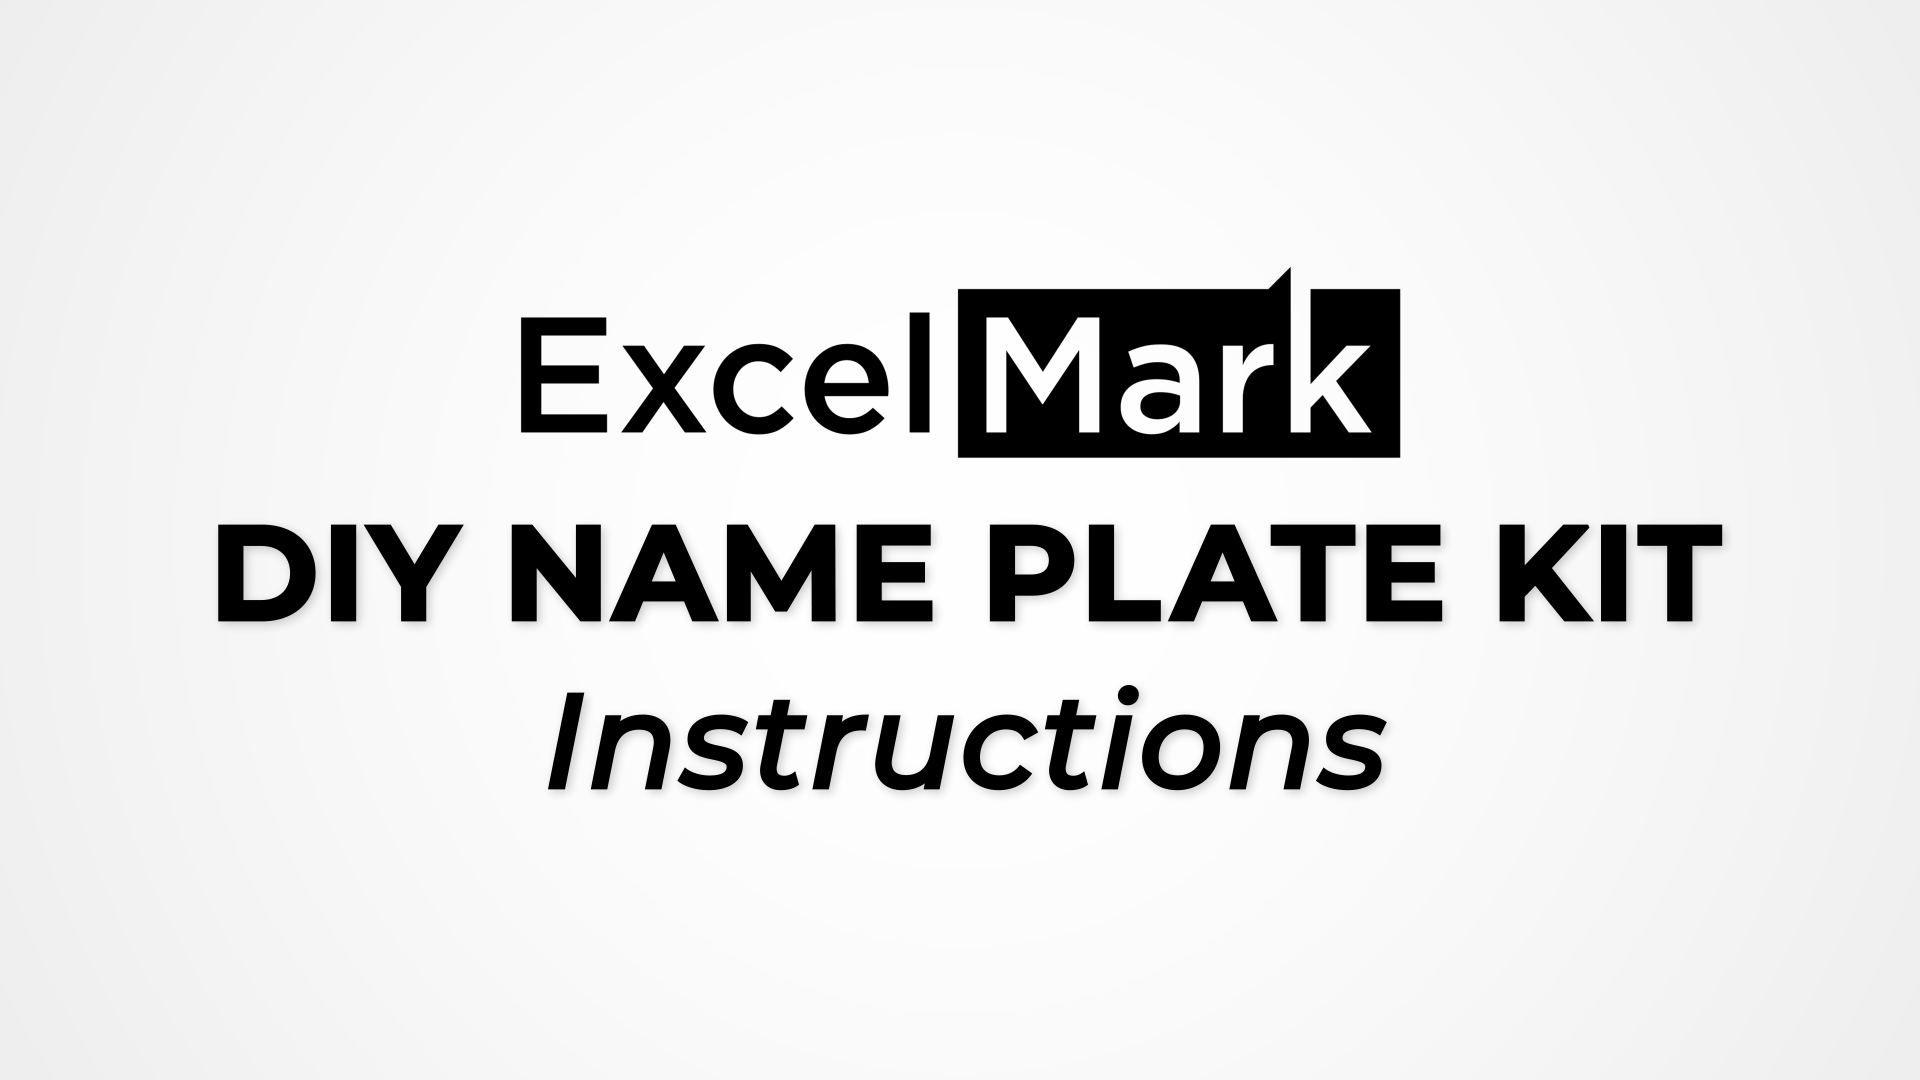 DIY Nameplate Kit Instructions